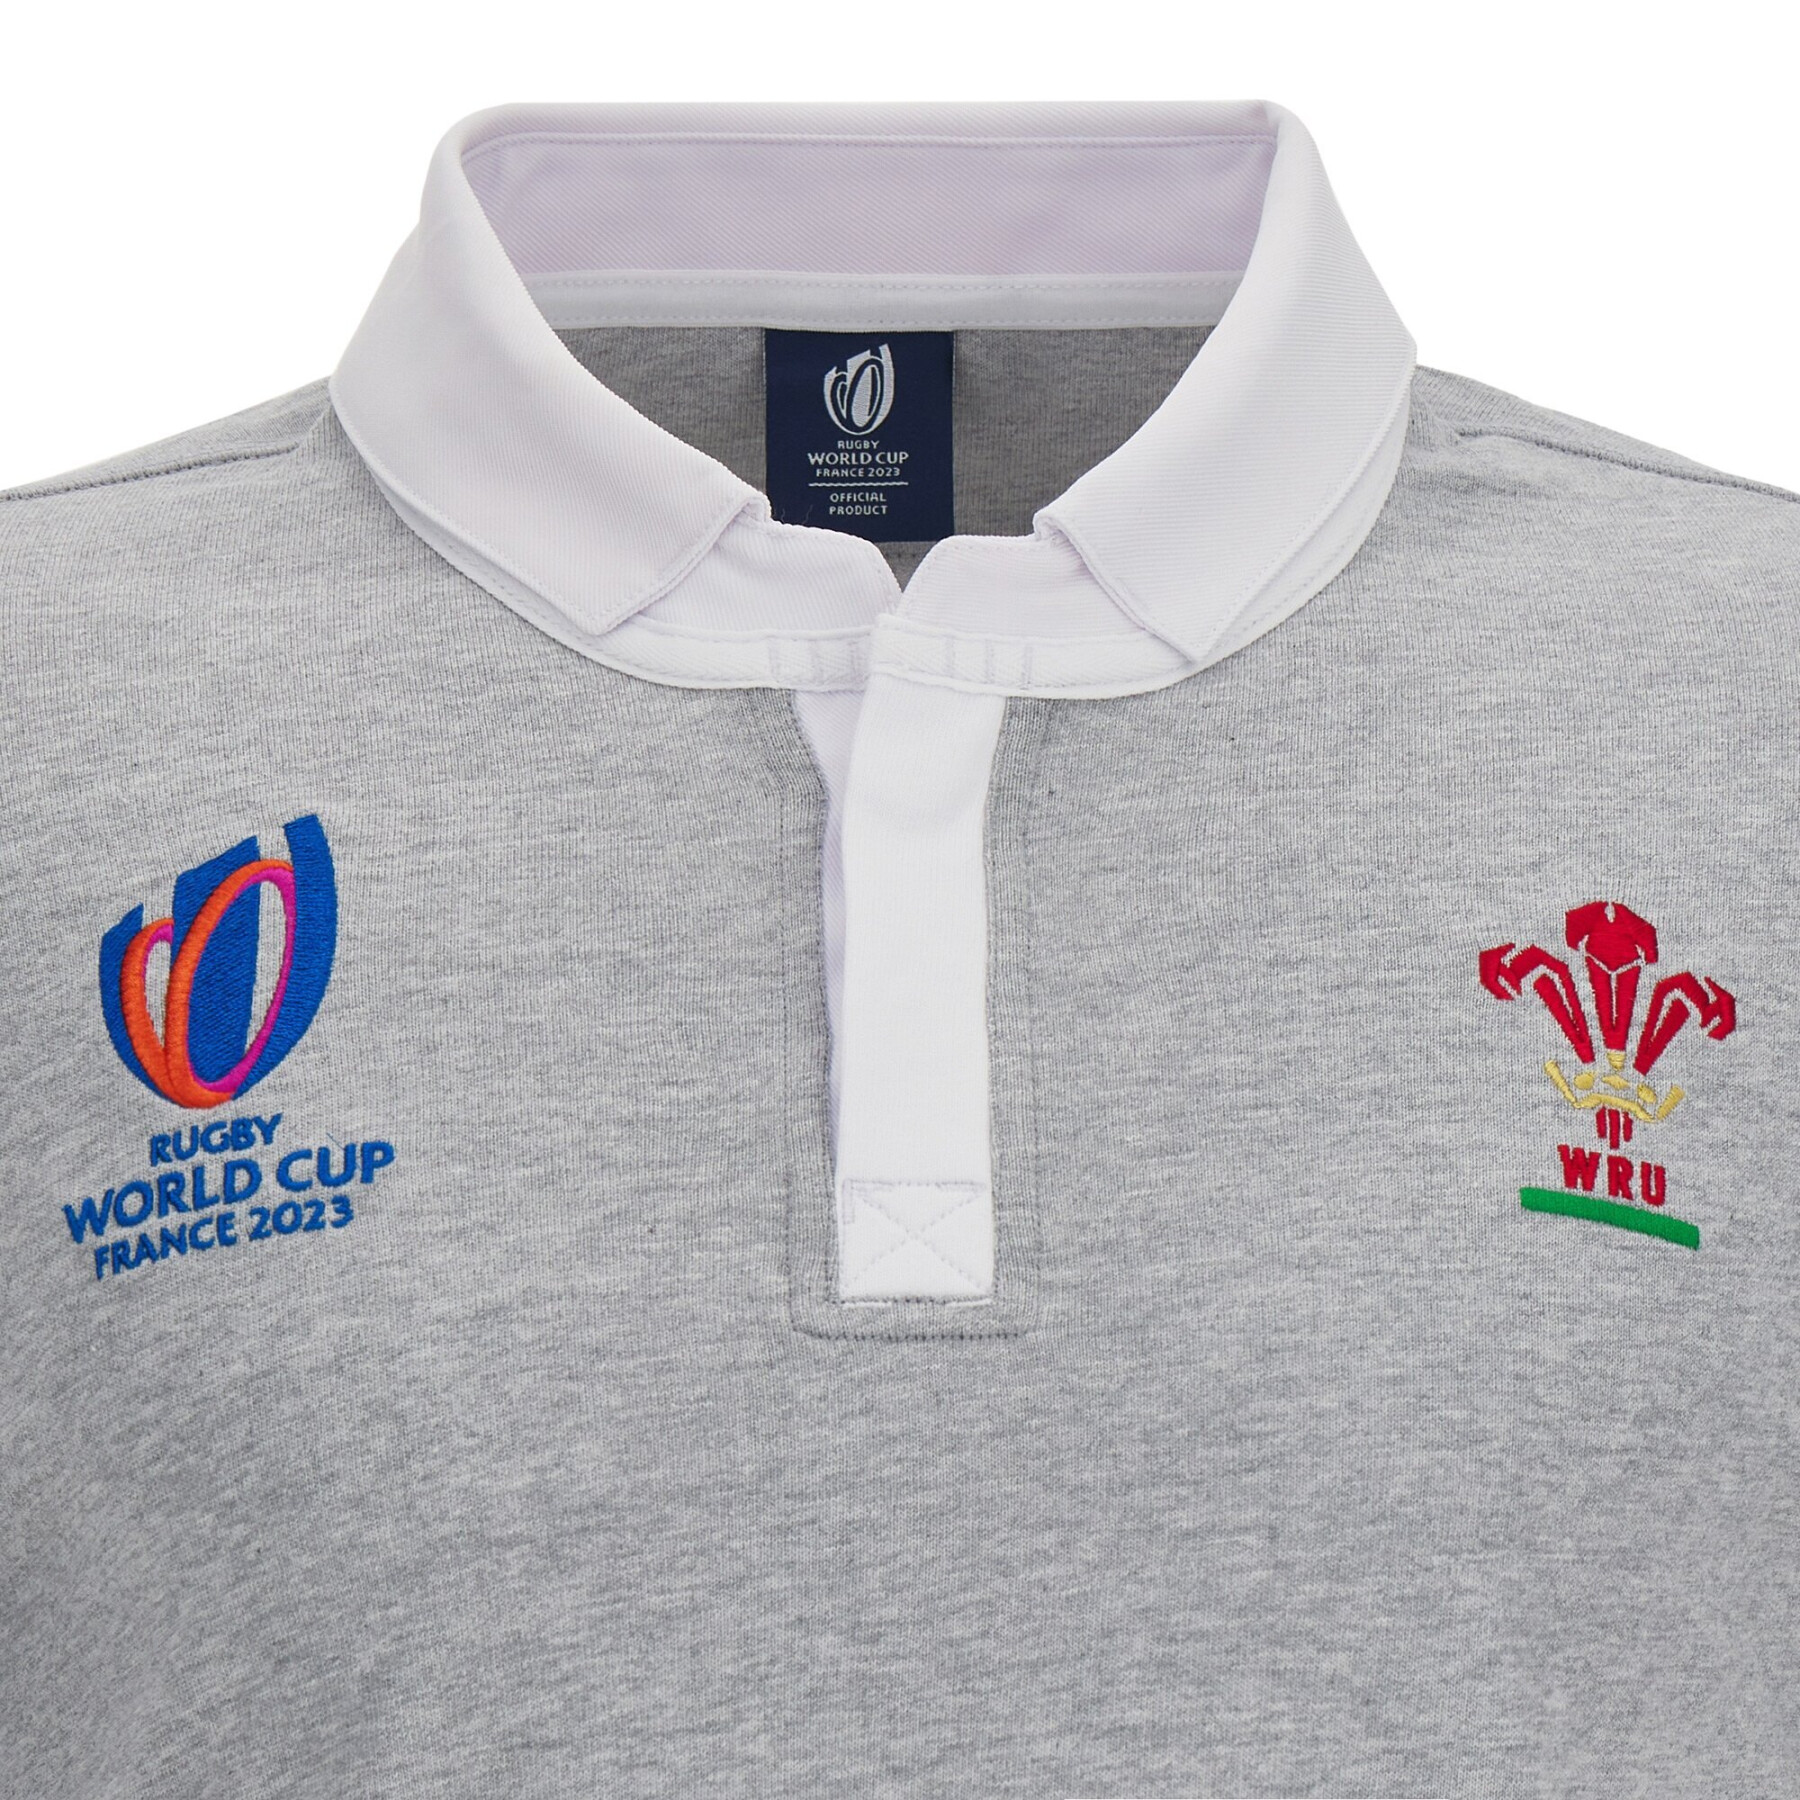 Camiseta para niños Gales Rugby XV Merch RWC